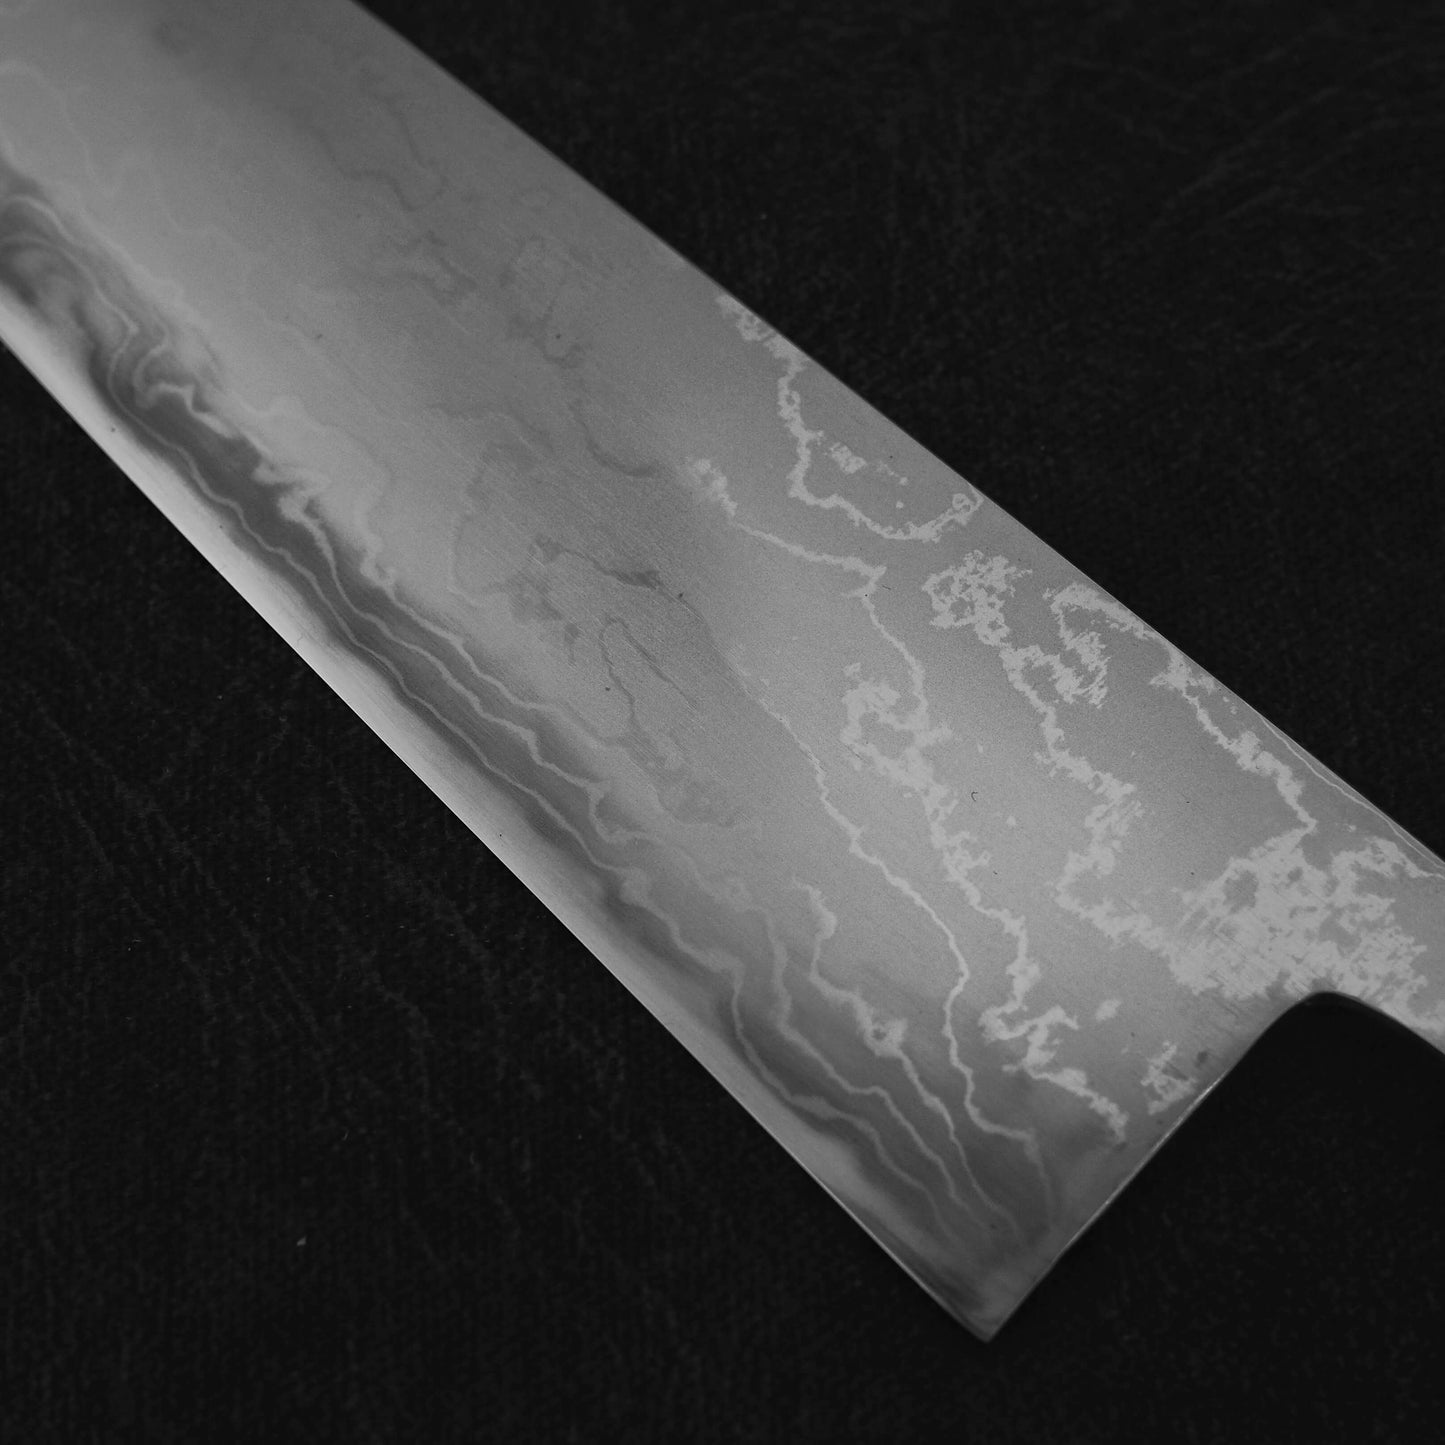 Toyama aogami #2 damascus 270mm gyuto - Zahocho Japanese Knives